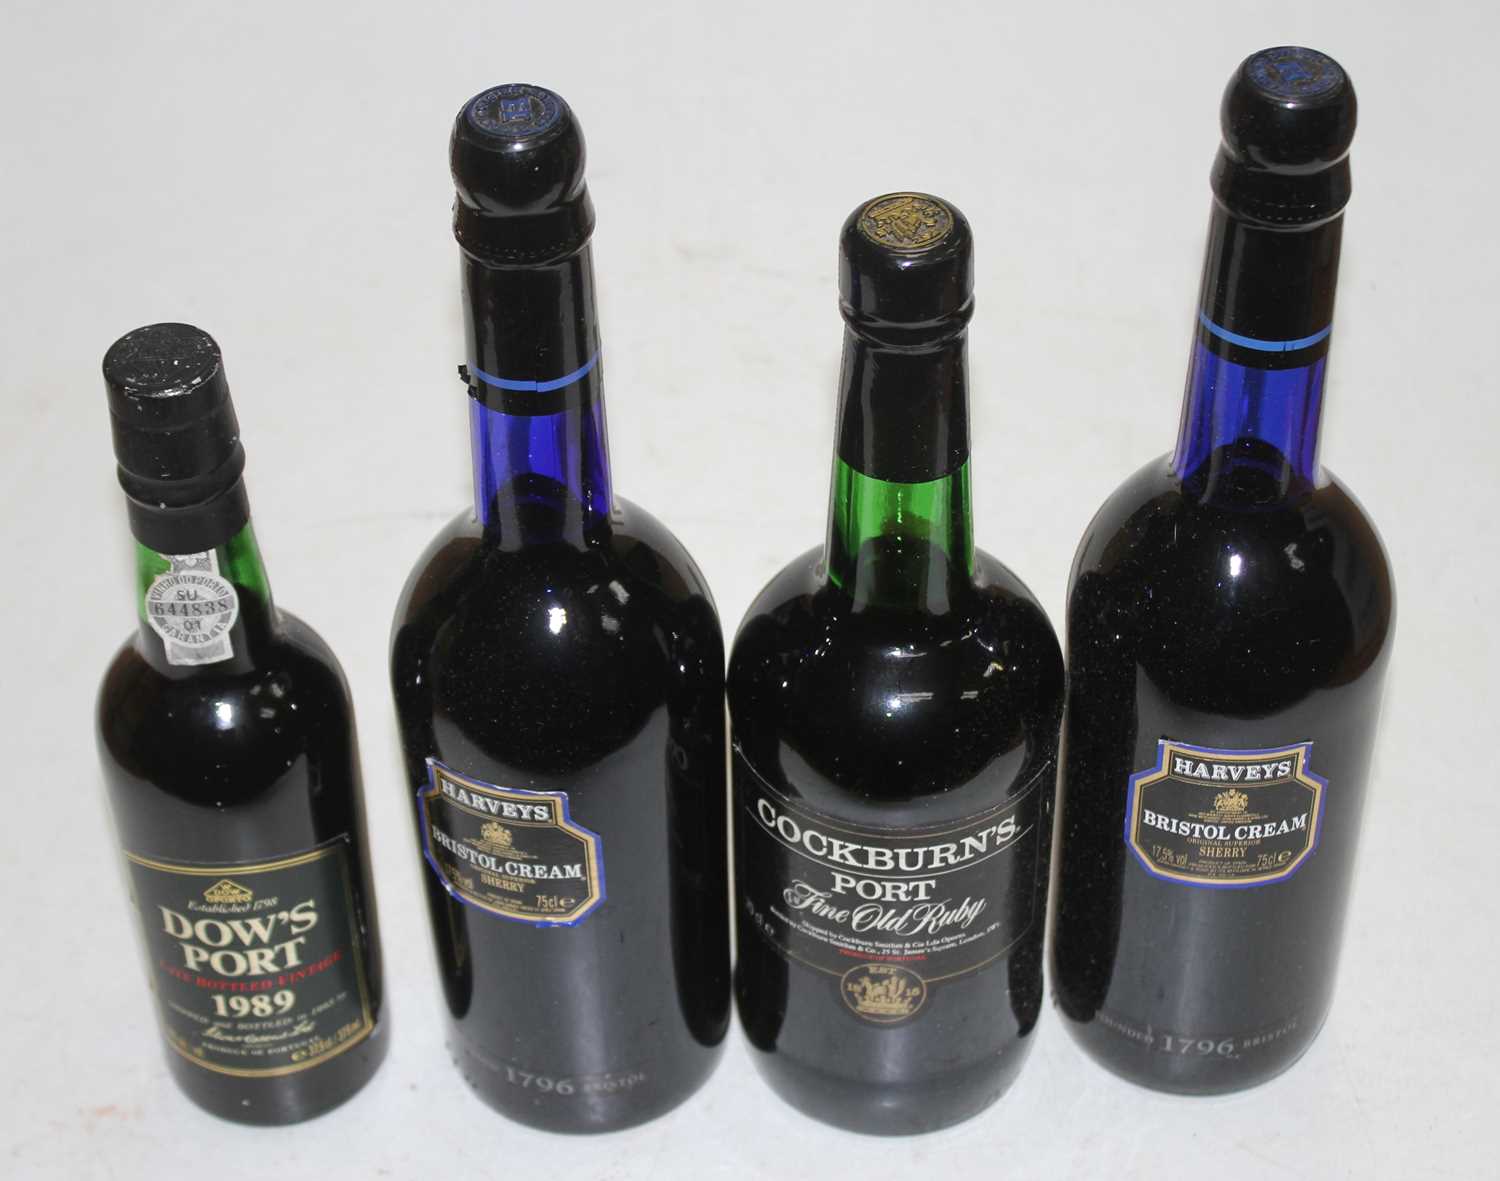 Fonseca Bin No.27 Fine Reserve port, one bottle (OWC); Graham's LBV port, 2014, one bottle in